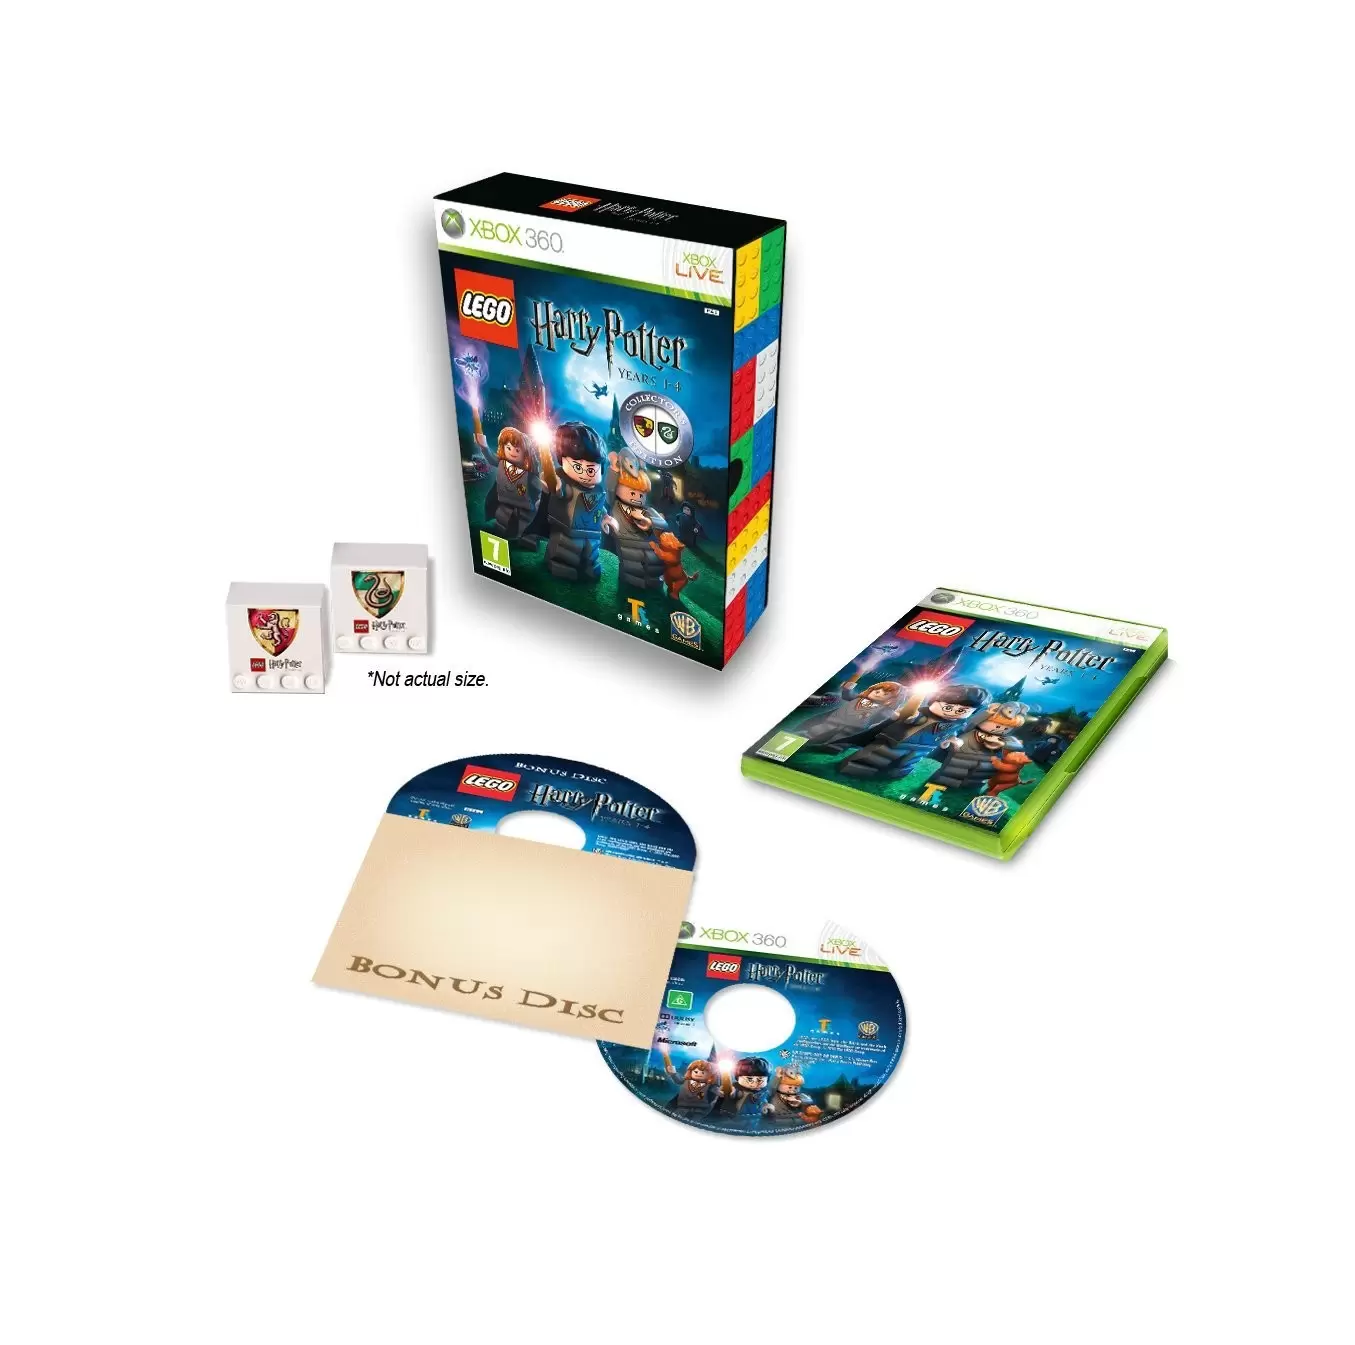 XBOX 360 Games - LEGO HARRY POTTER anni 1-4 collectors edition